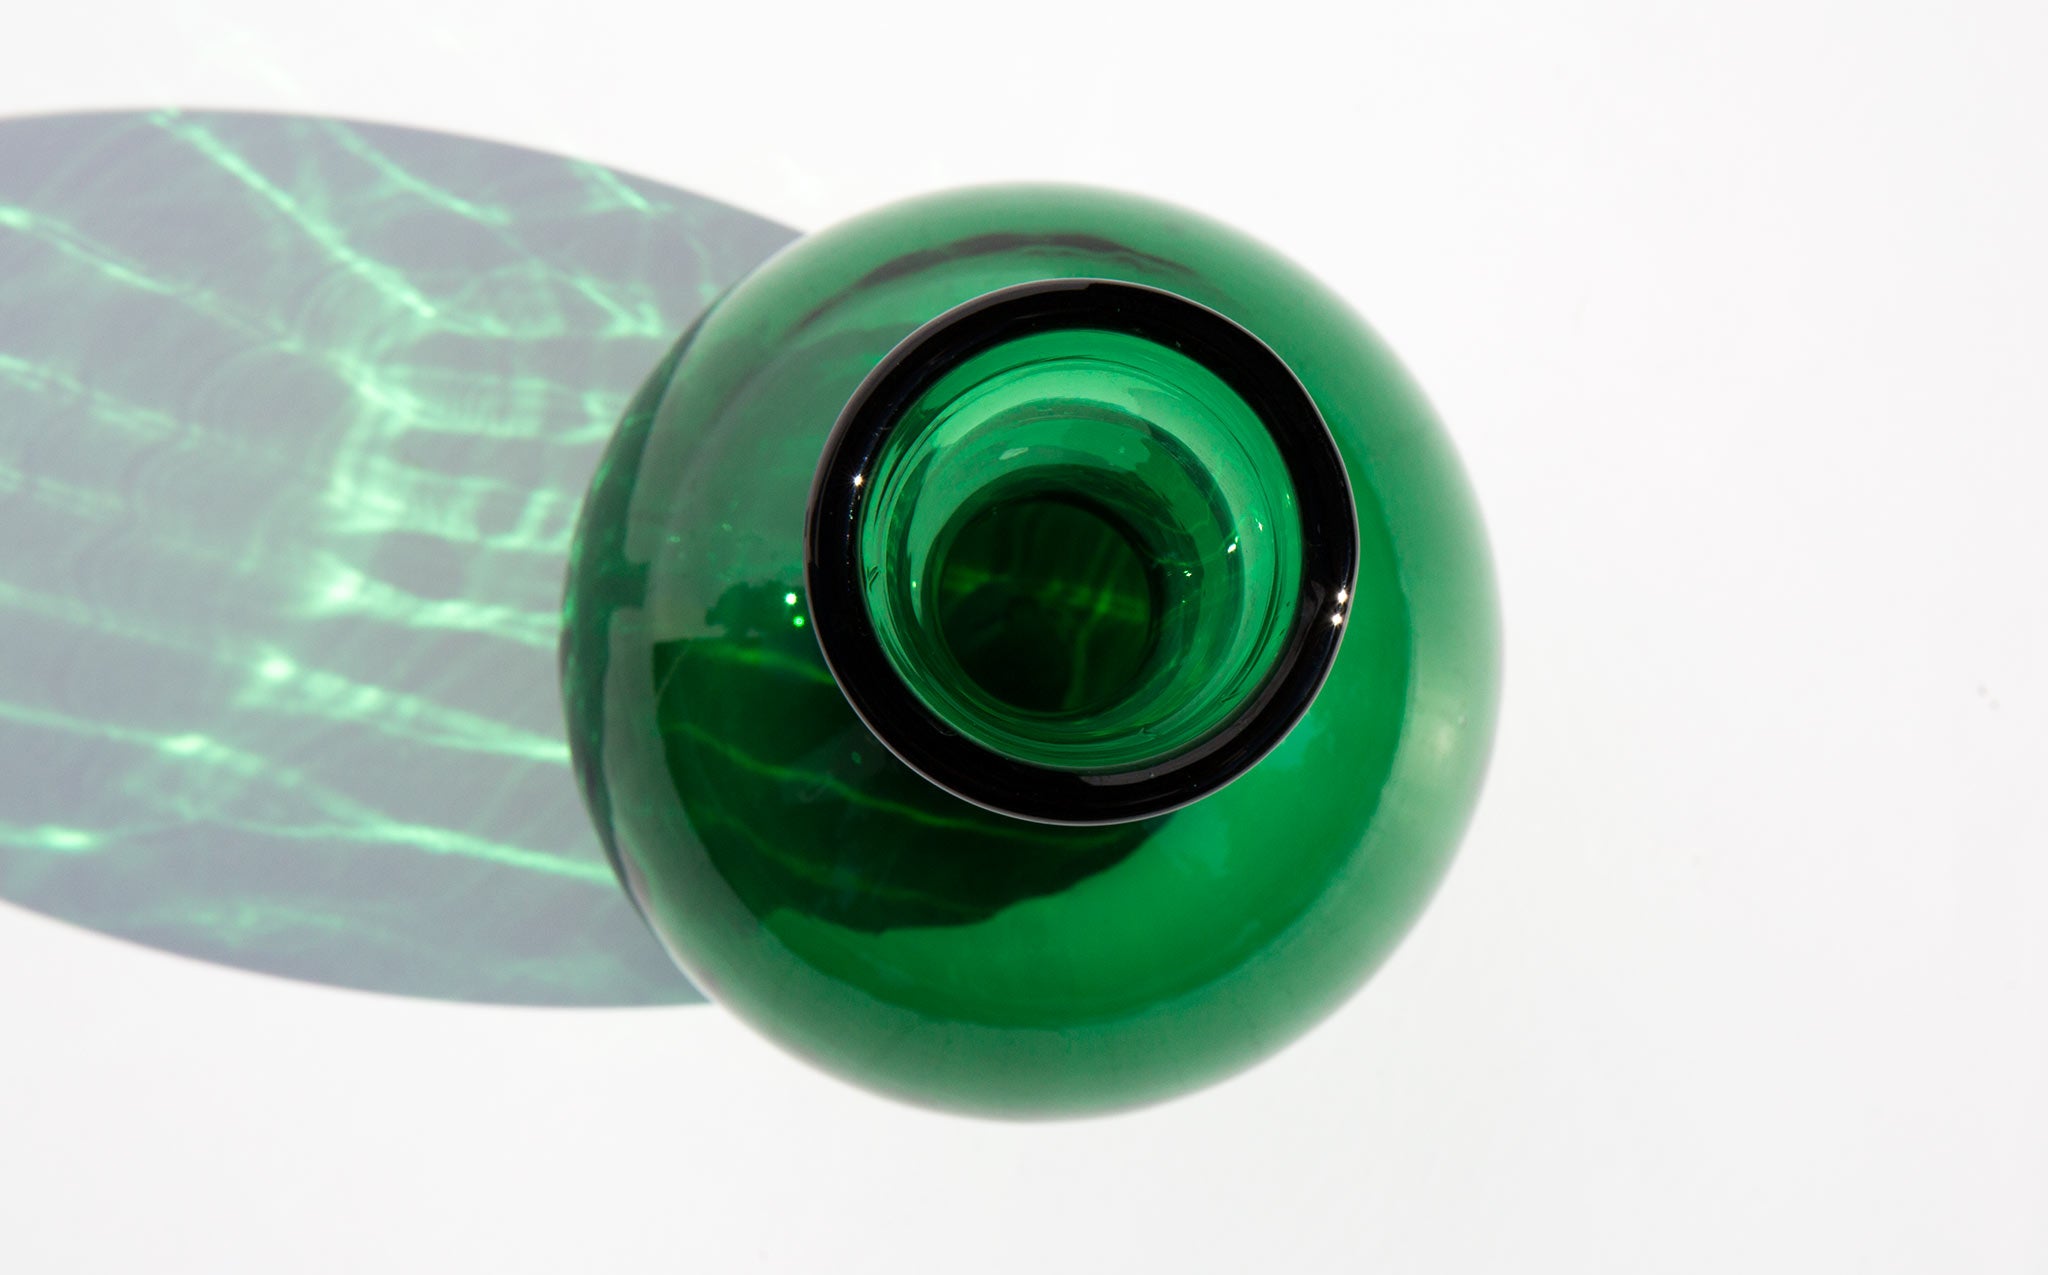 Emerald Vase